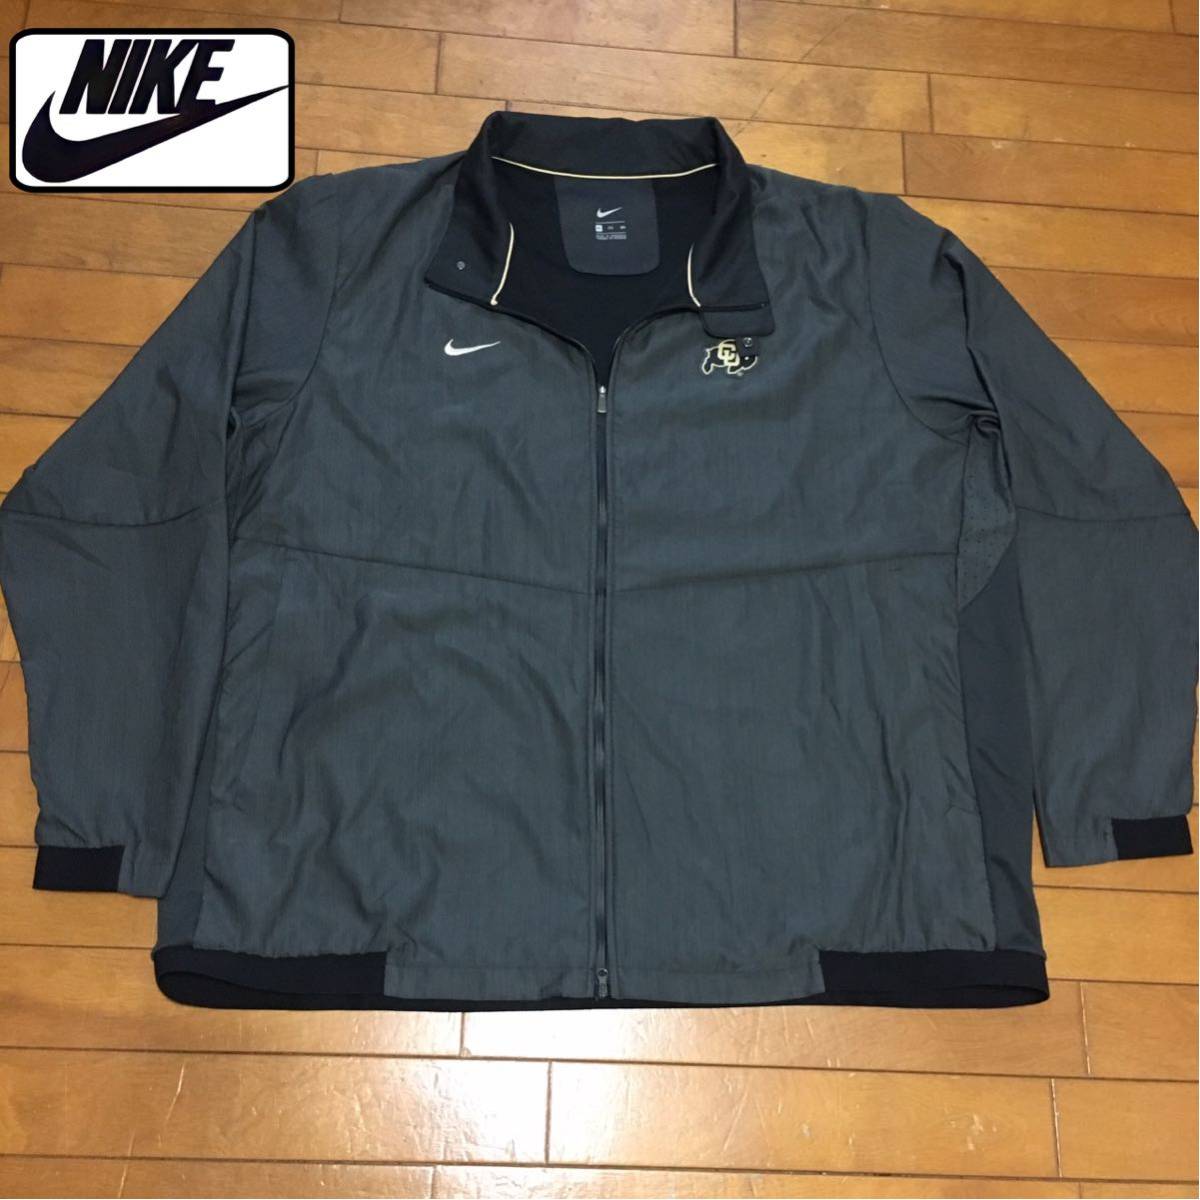 ★ [Nike] ★ Колорадо Go Buffs Nylon Jacket Большого размера ★ Размер 3xl ★ O777